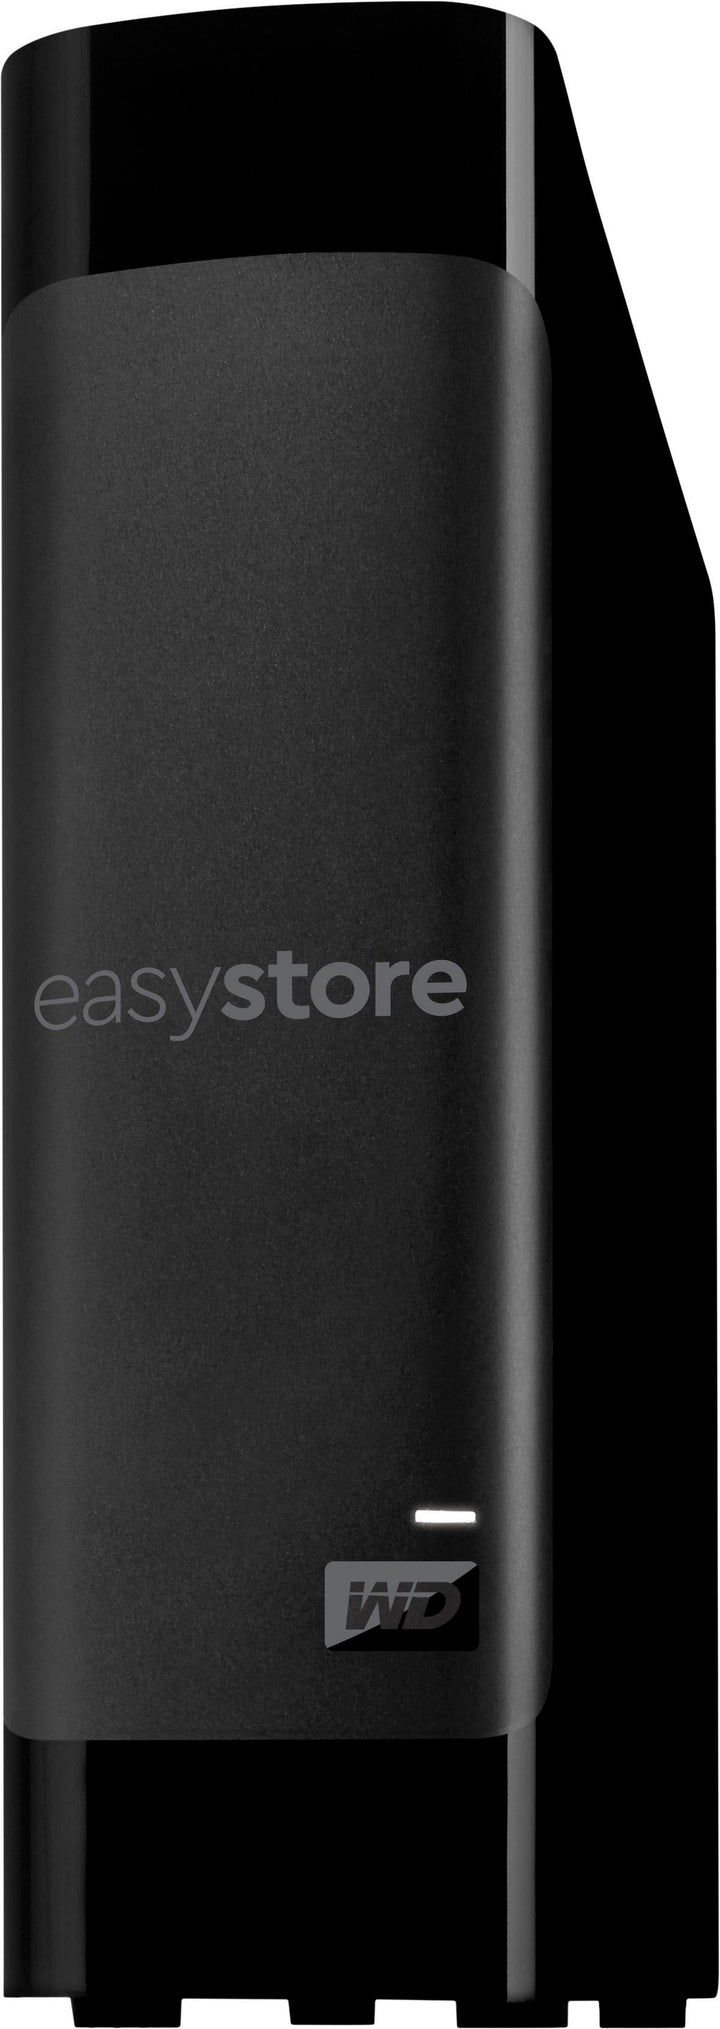 WD - easystore 18TB External USB 3.0 Hard Drive - Black_6